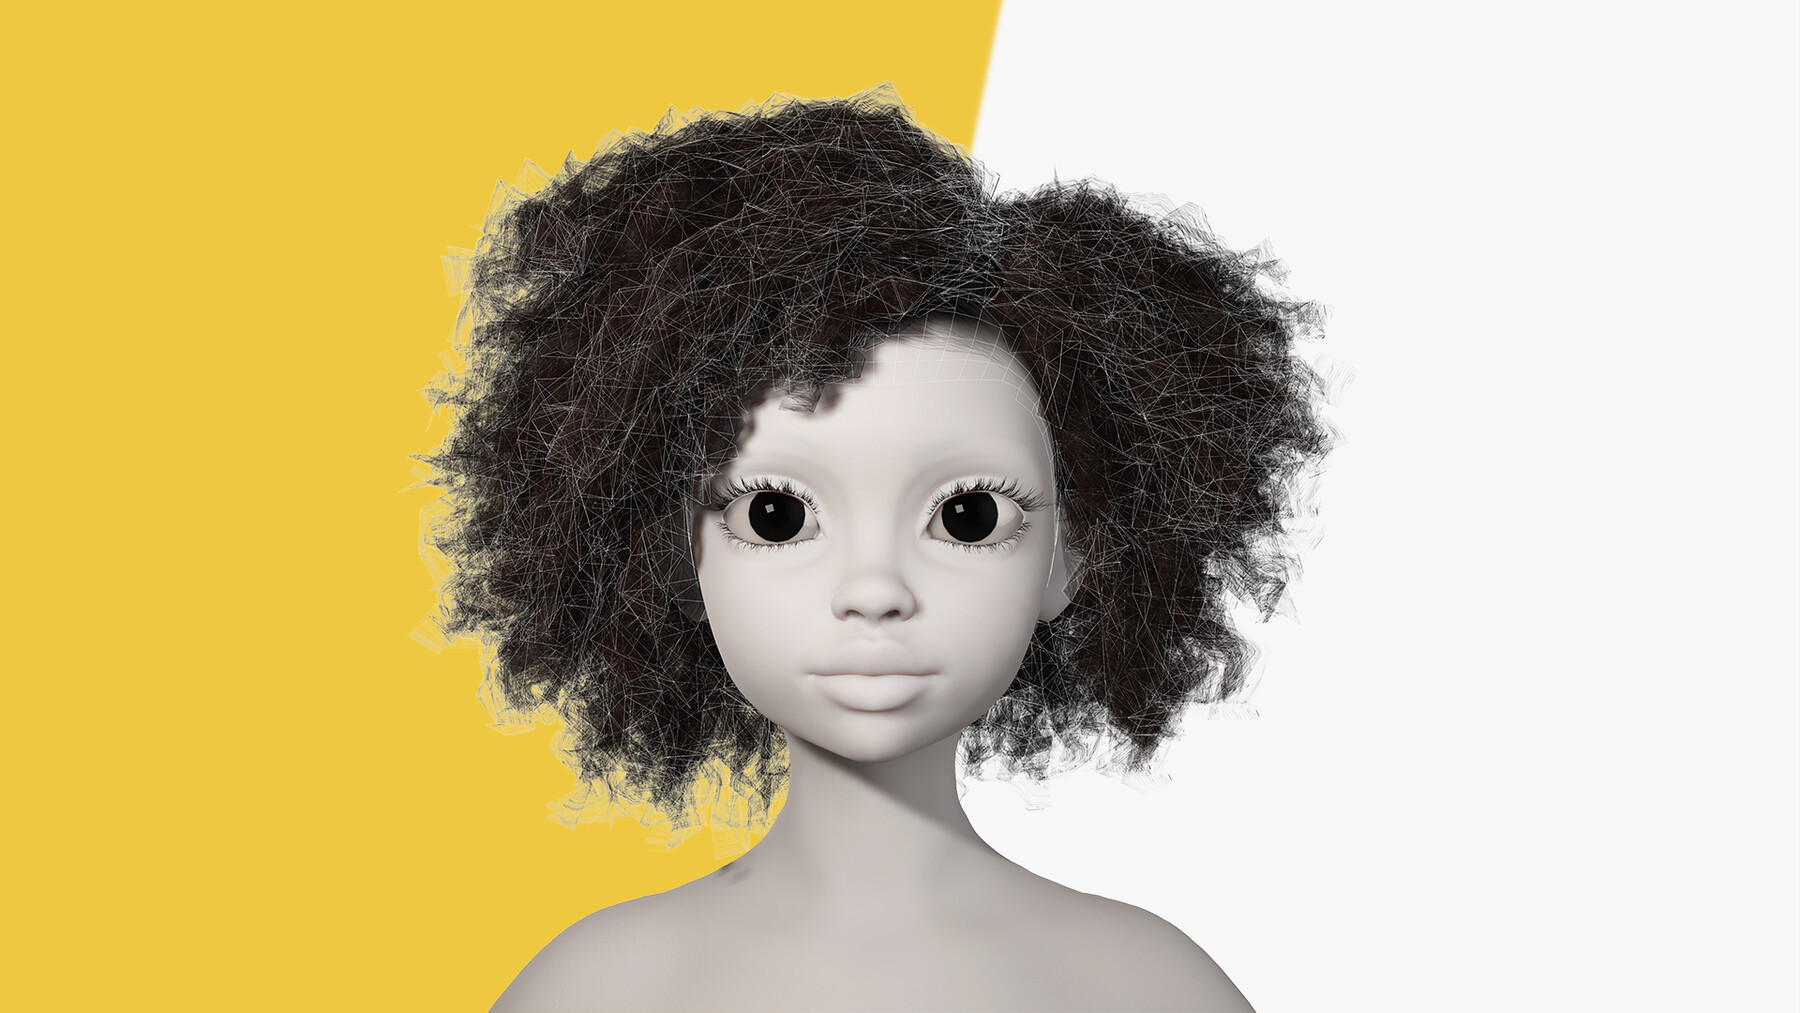 3D model Realistic Female Hair Card 10 VR / AR / low-poly